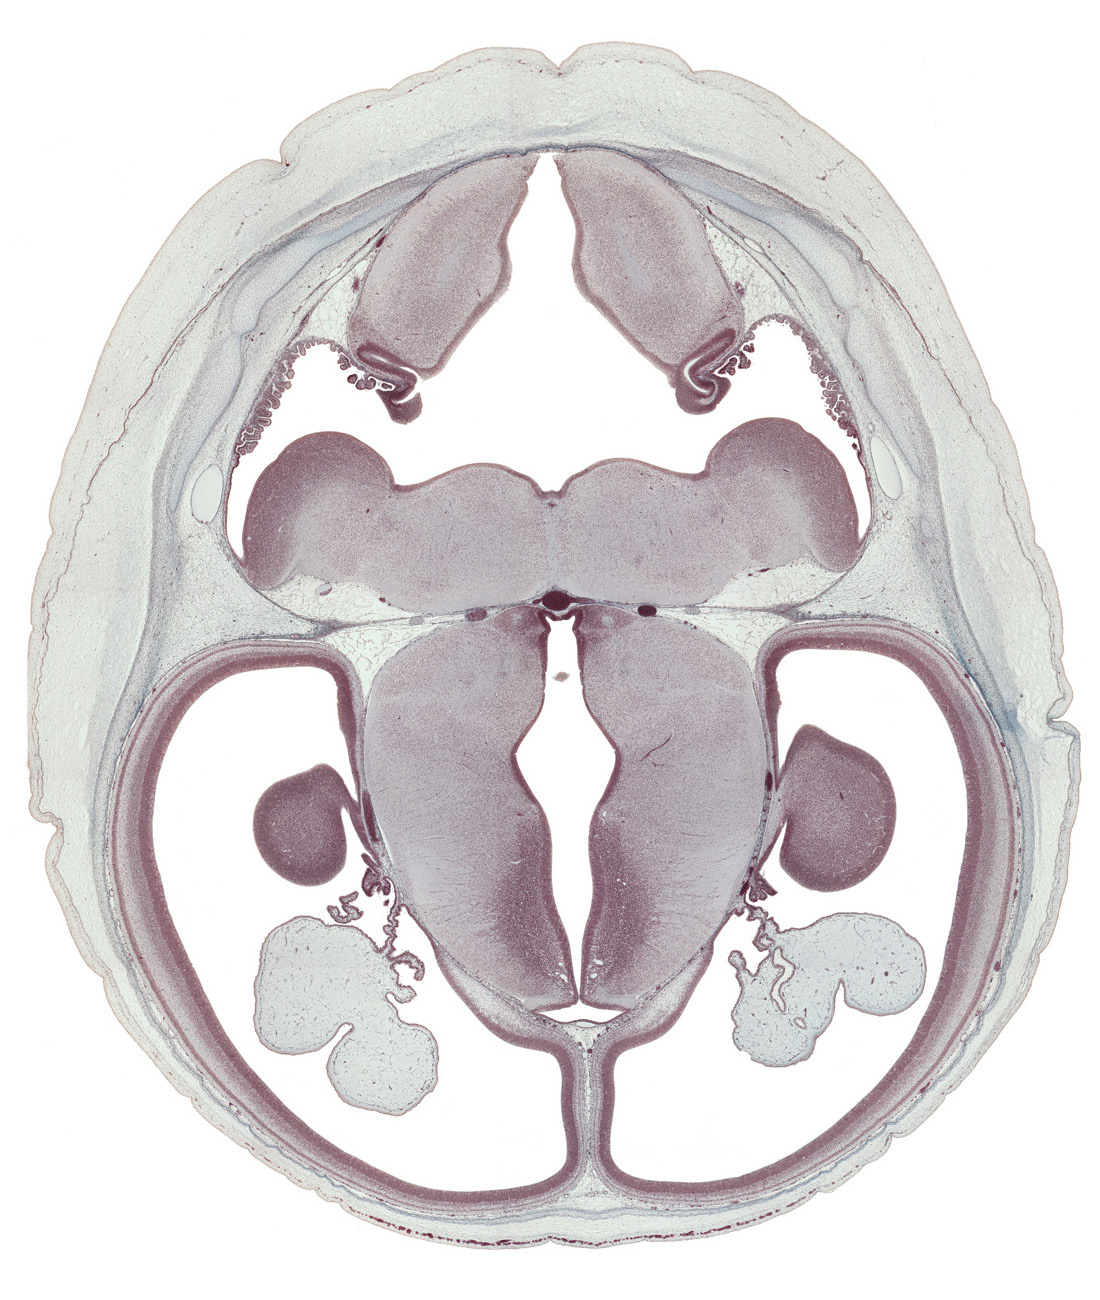 anterior choroidal artery, basilar artery, choroid plexus, dorsal thalamus, hippocampus, hypothalamic sulcus, hypothalamus, inferior sagittal sinus, intermediate zone, lateral ventricle, lateral ventricular eminence (telencephalon), marginal ridge, marginal zone, medial ventricular eminence (diencephalon), medulla oblongata, oculomotor nerve (CN III), posterior communicating artery, roof of rhombencoel (fourth ventricle), sulcus limitans, trochlear nerve (CN IV), ventricular zone, vestibular nucleus region